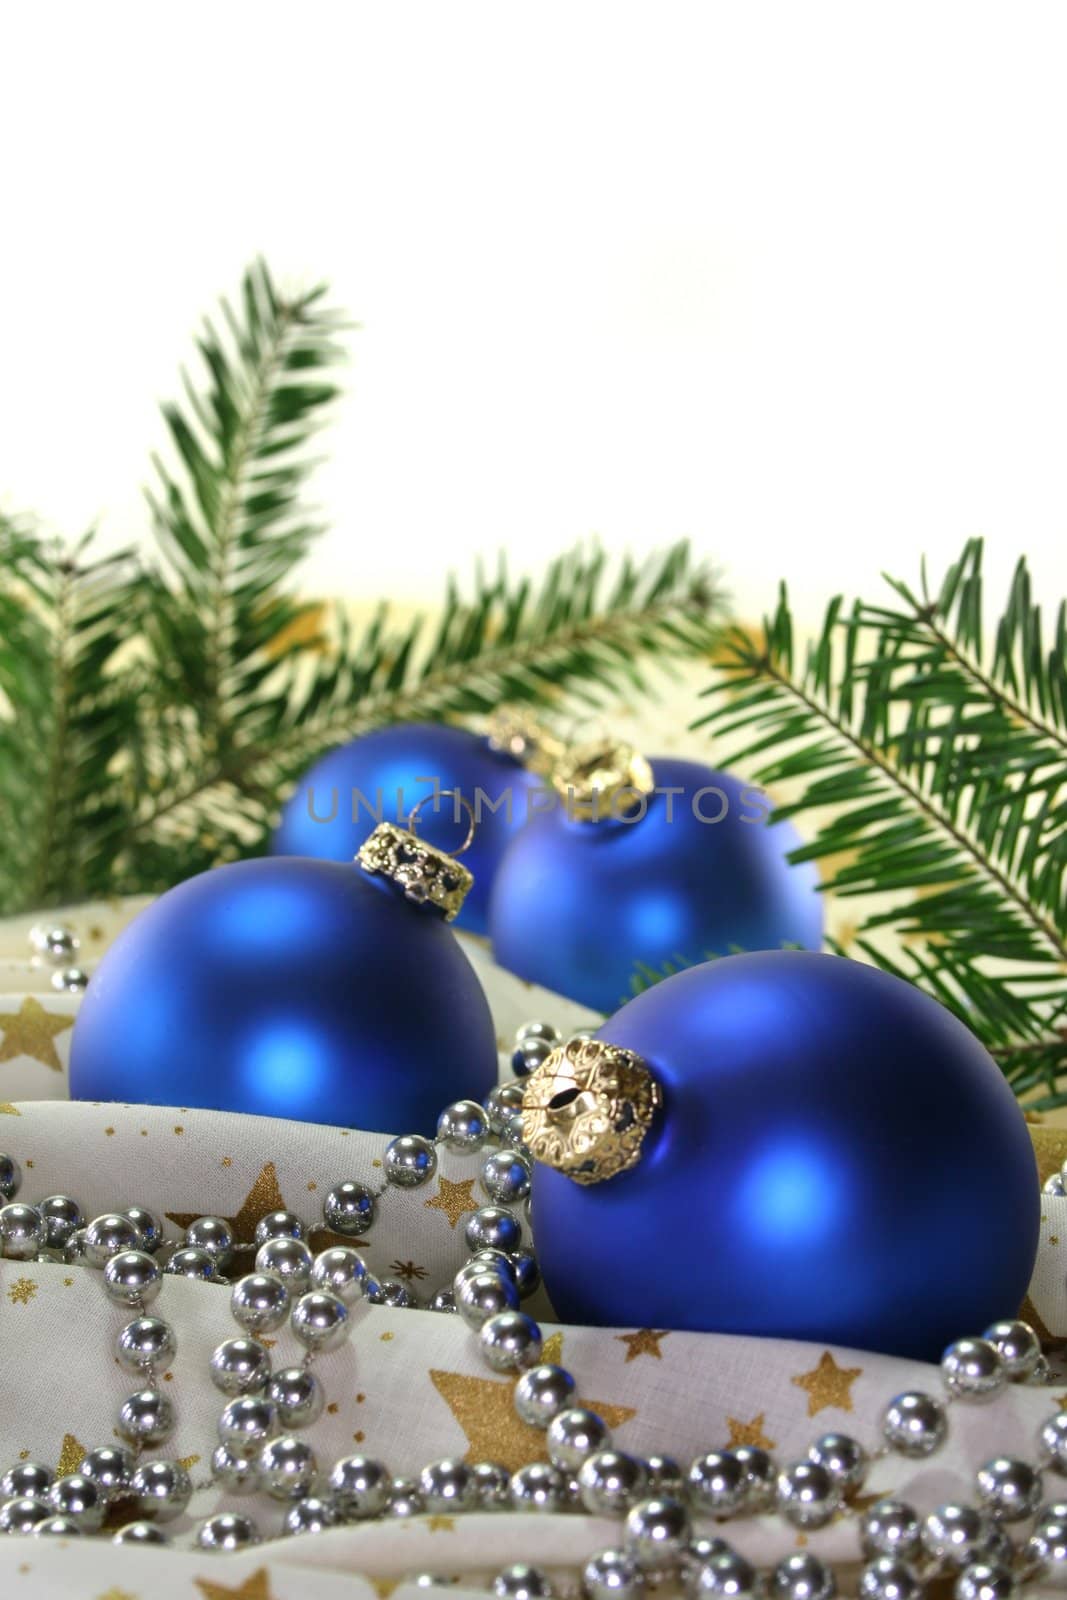 blue Christmas balls and pine branches on Christmas fabric